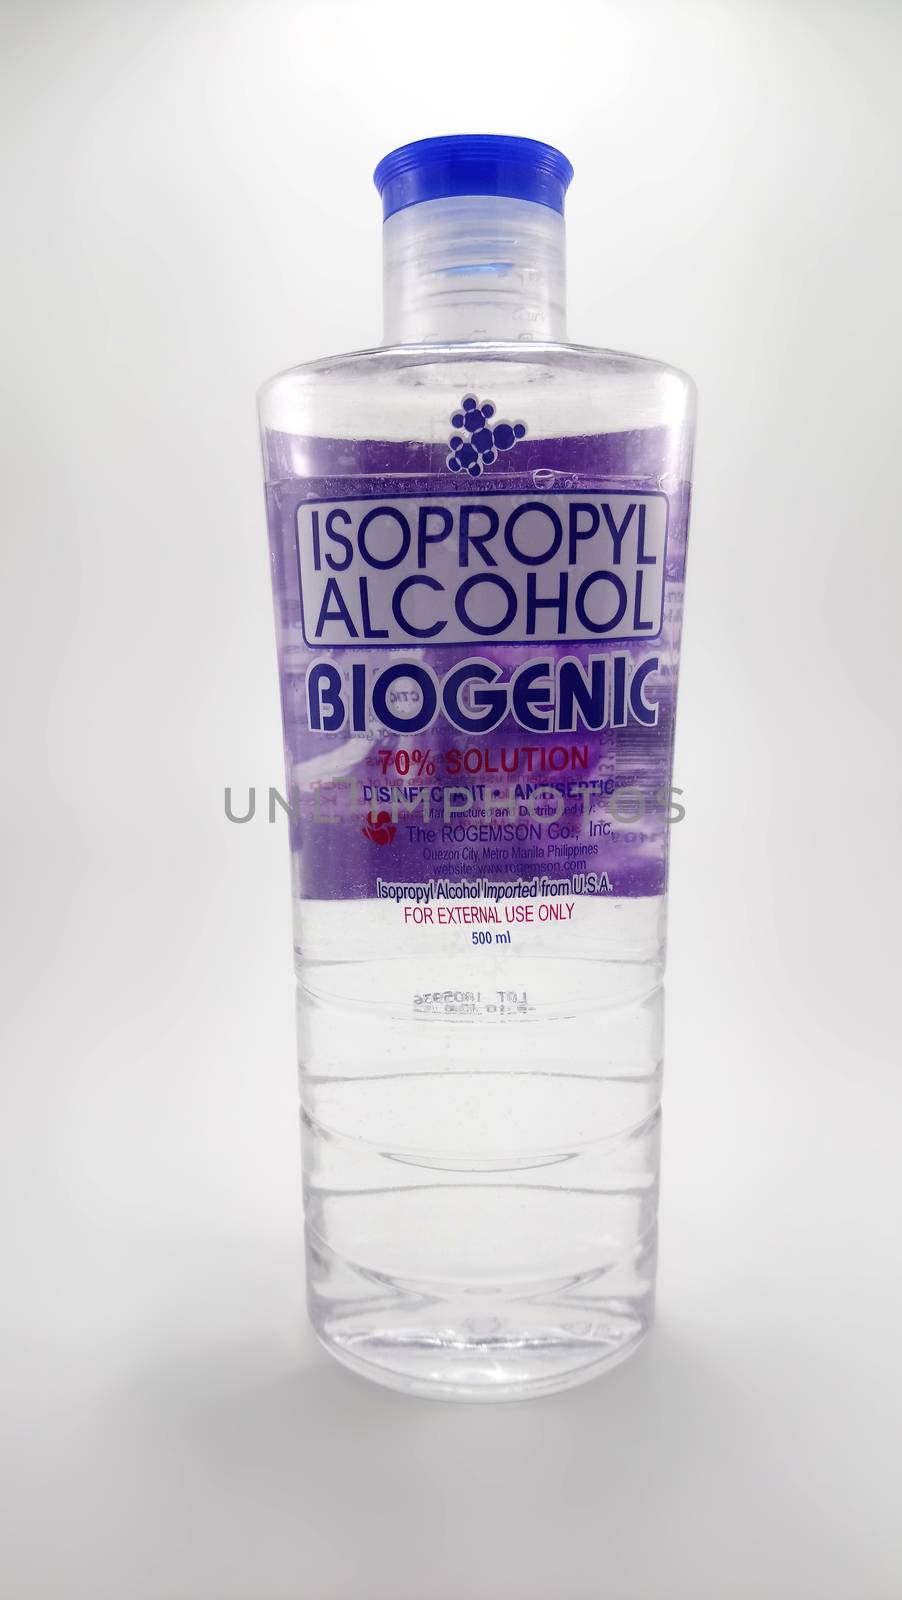 MANILA, PH - JUNE 23 - Biogenic isopropyl alcohol on June 23, 2020 in Manila, Philippines.